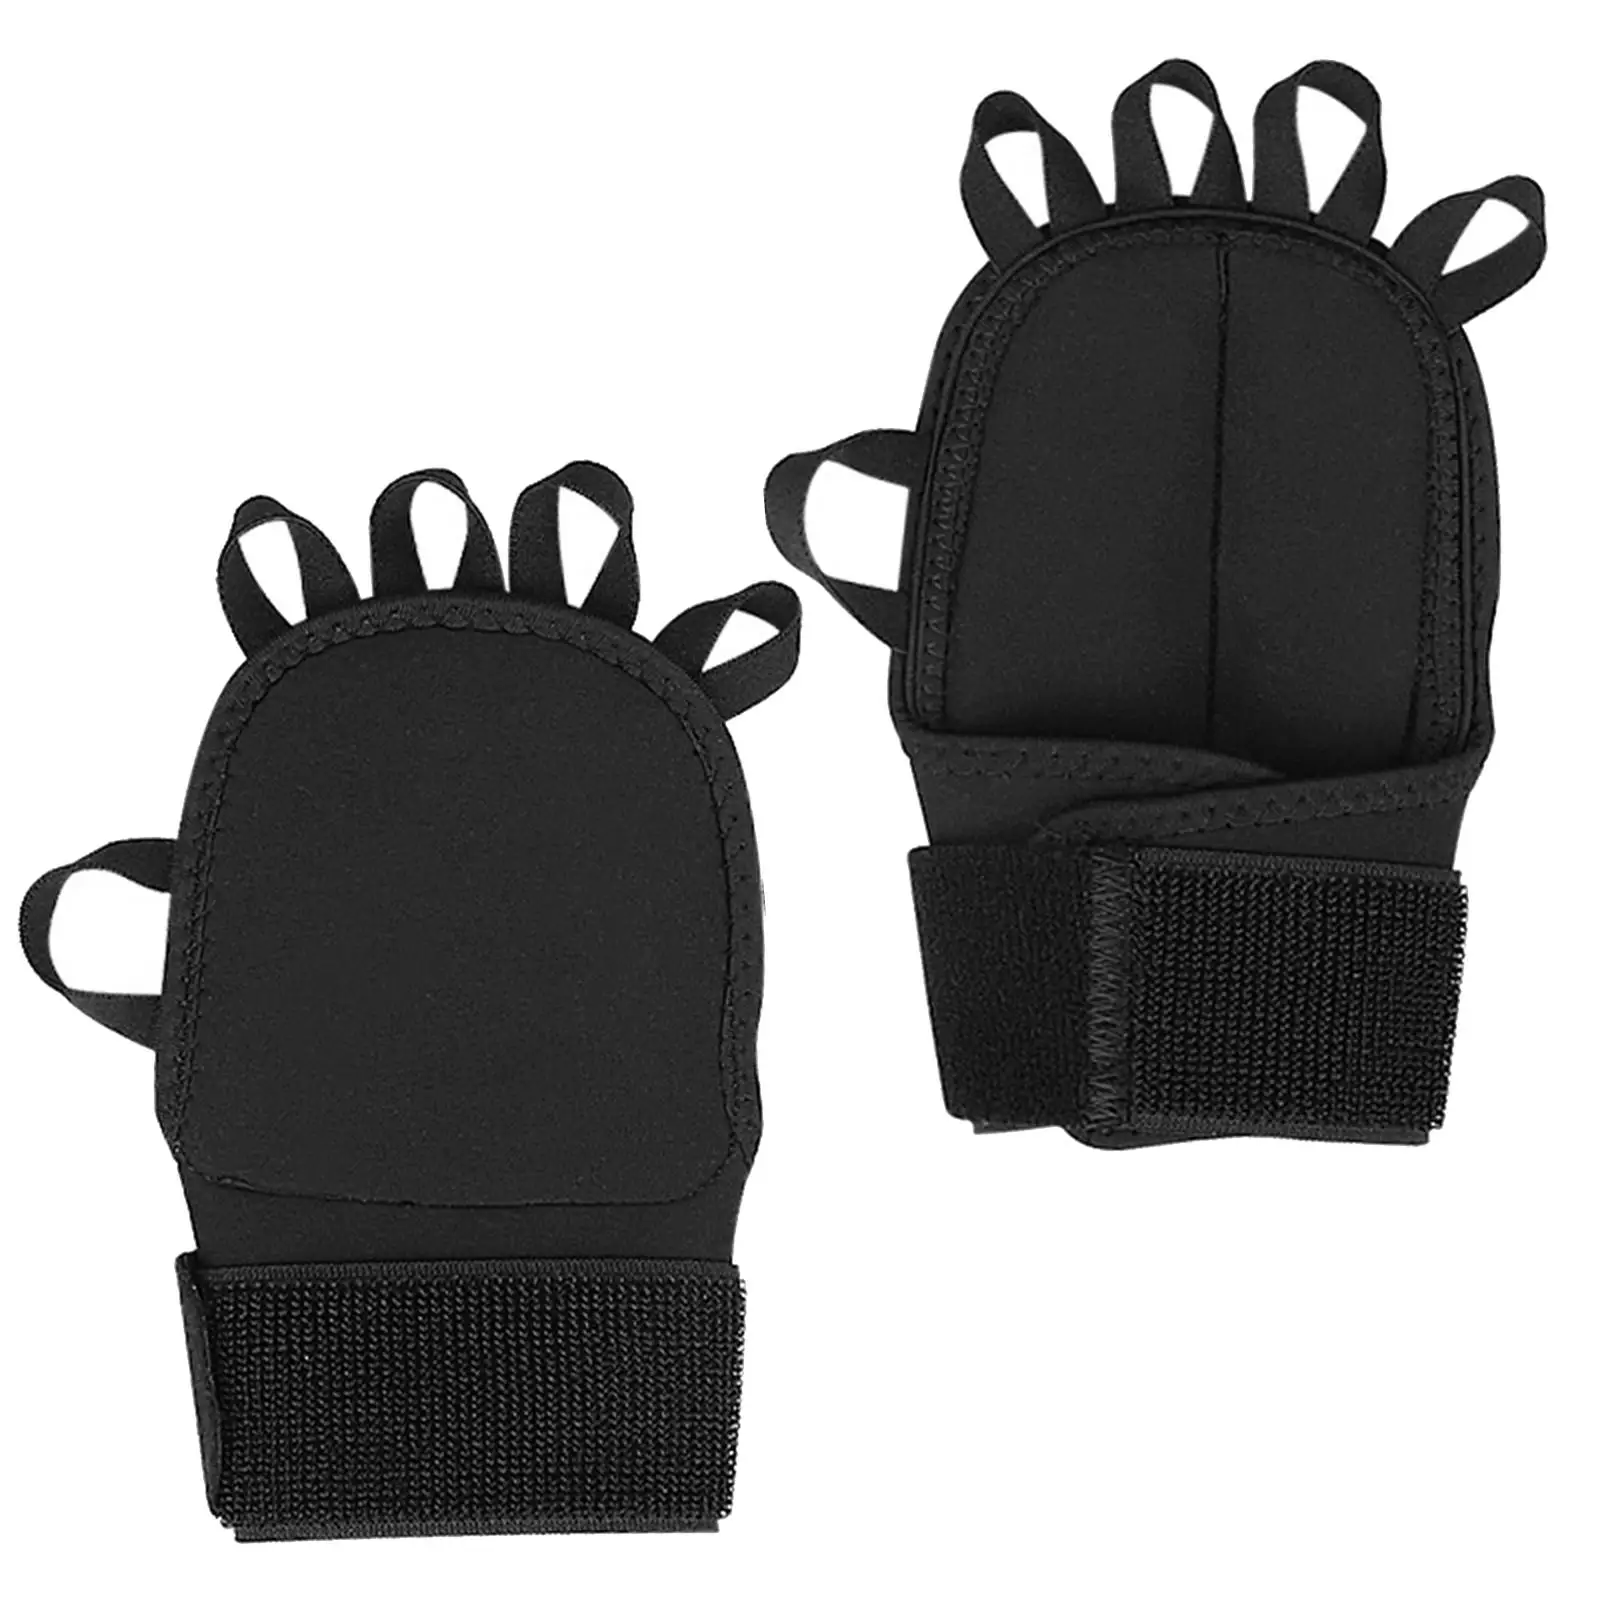 Weightlifting Gloves Adjustable Anti Skid Gym Exercise Gloves Workout Gloves